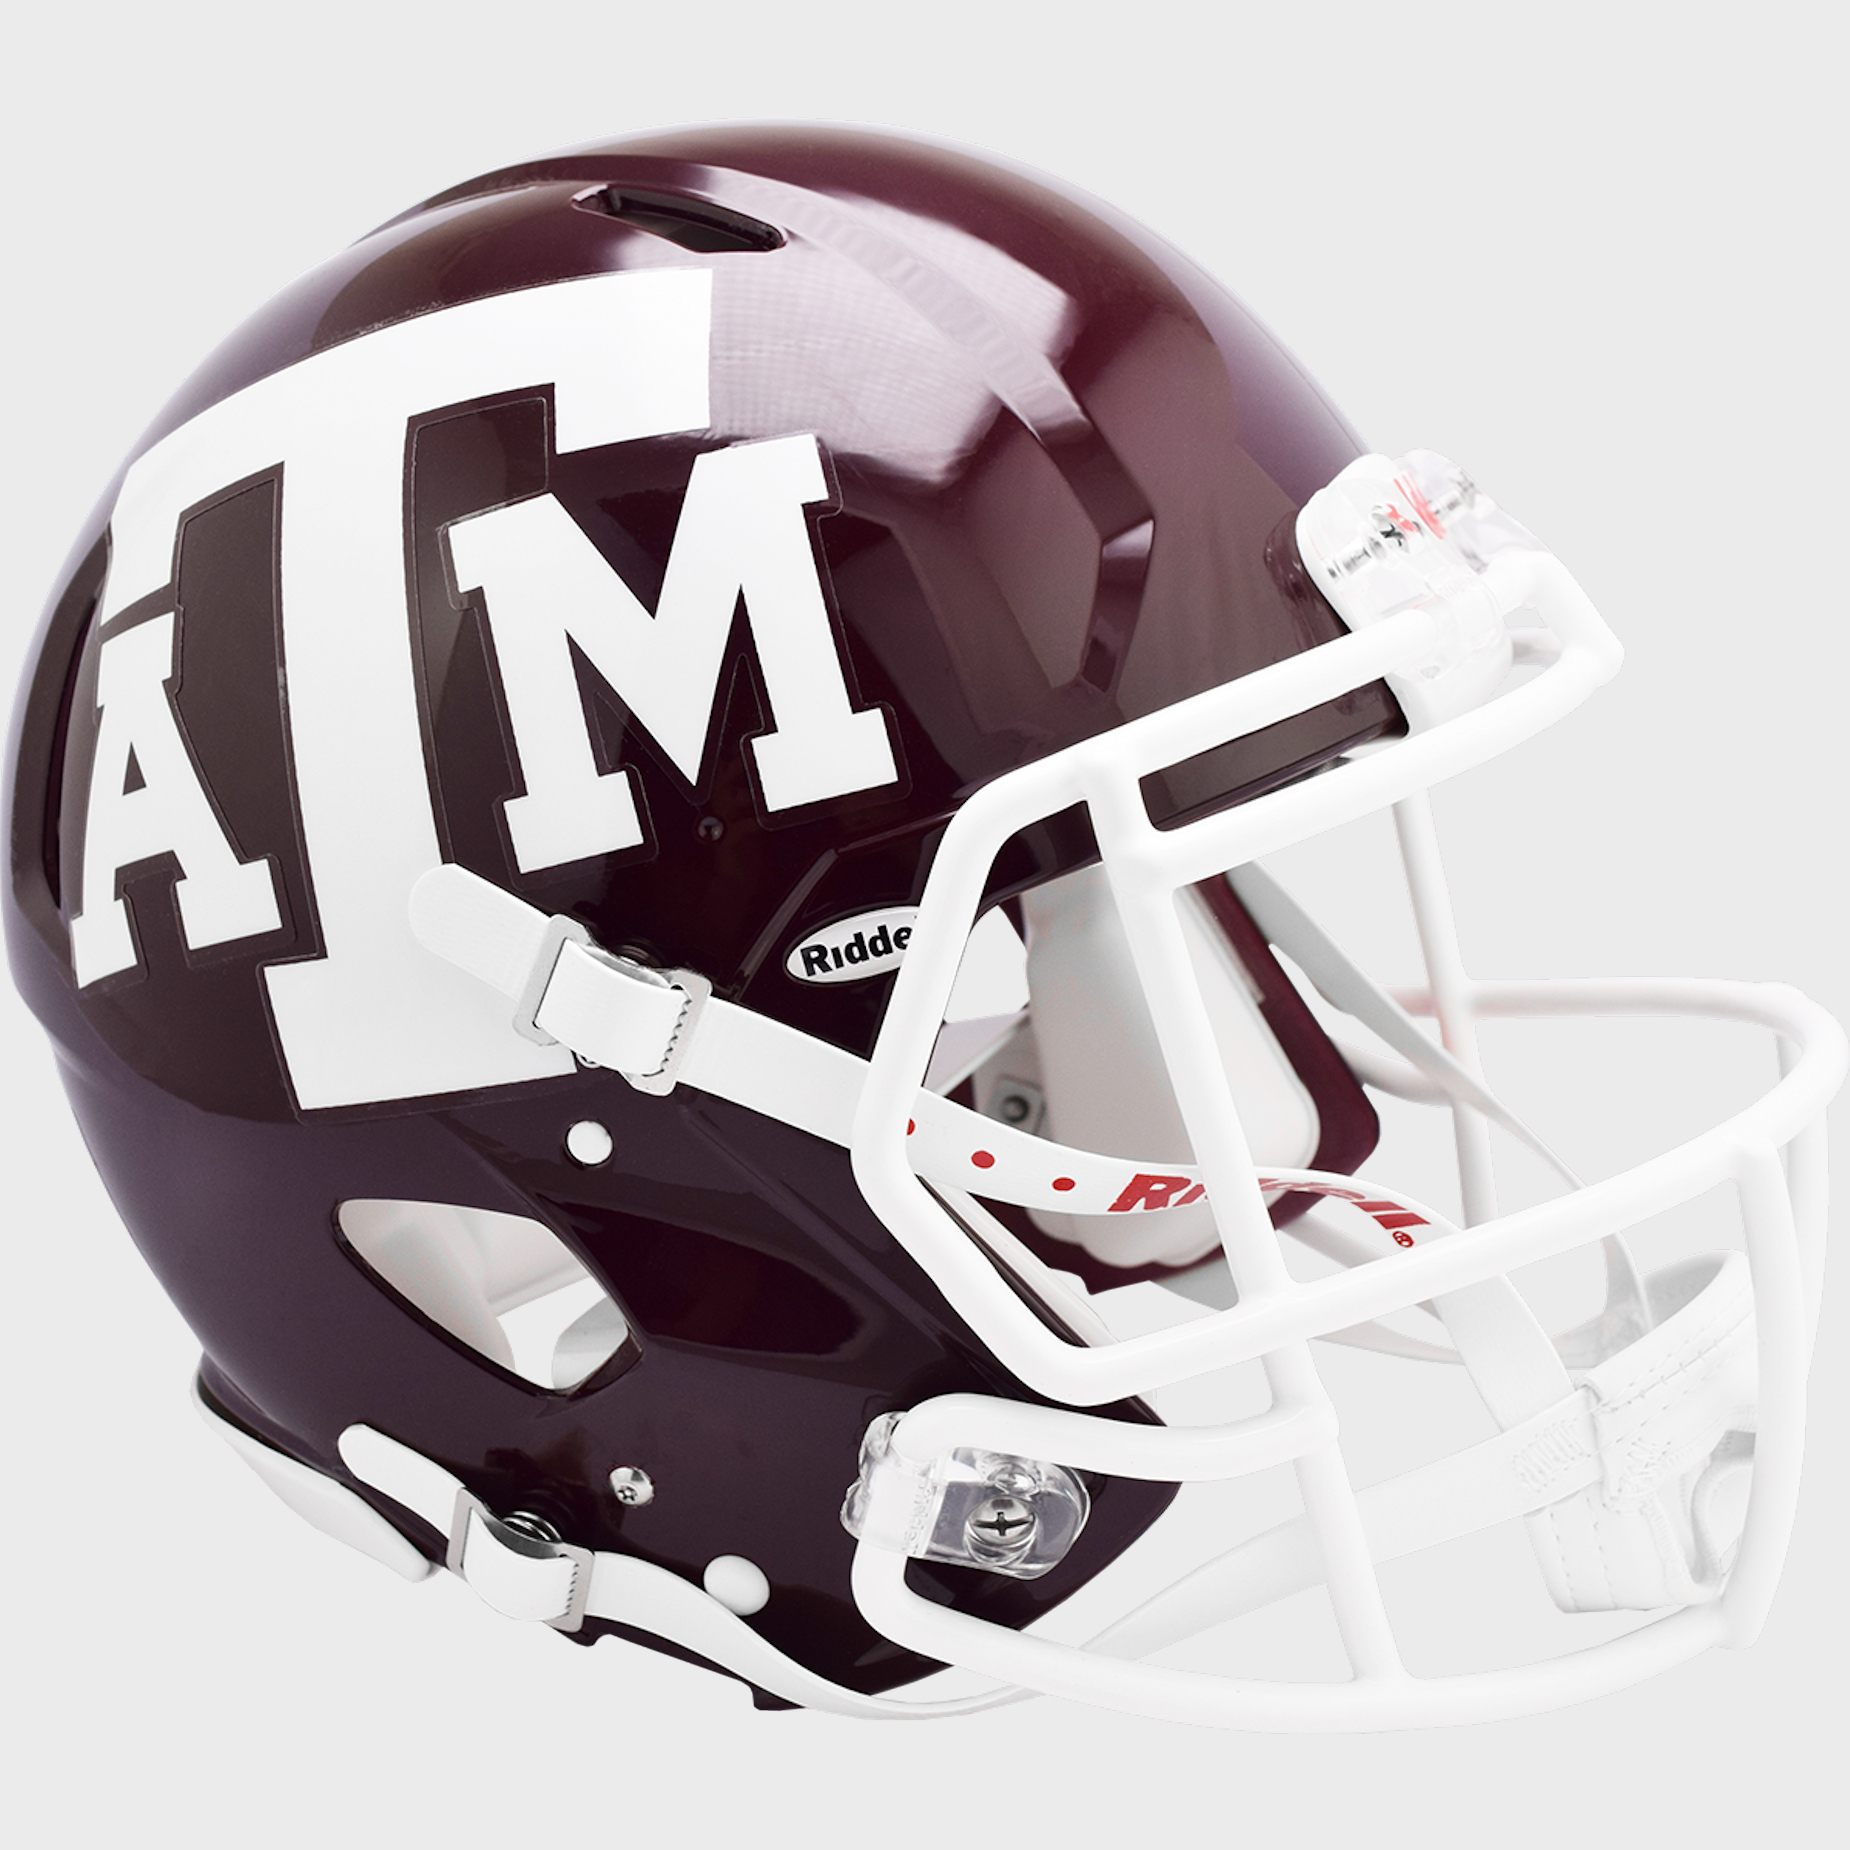 Texas A&M Aggies authentic full size helmet